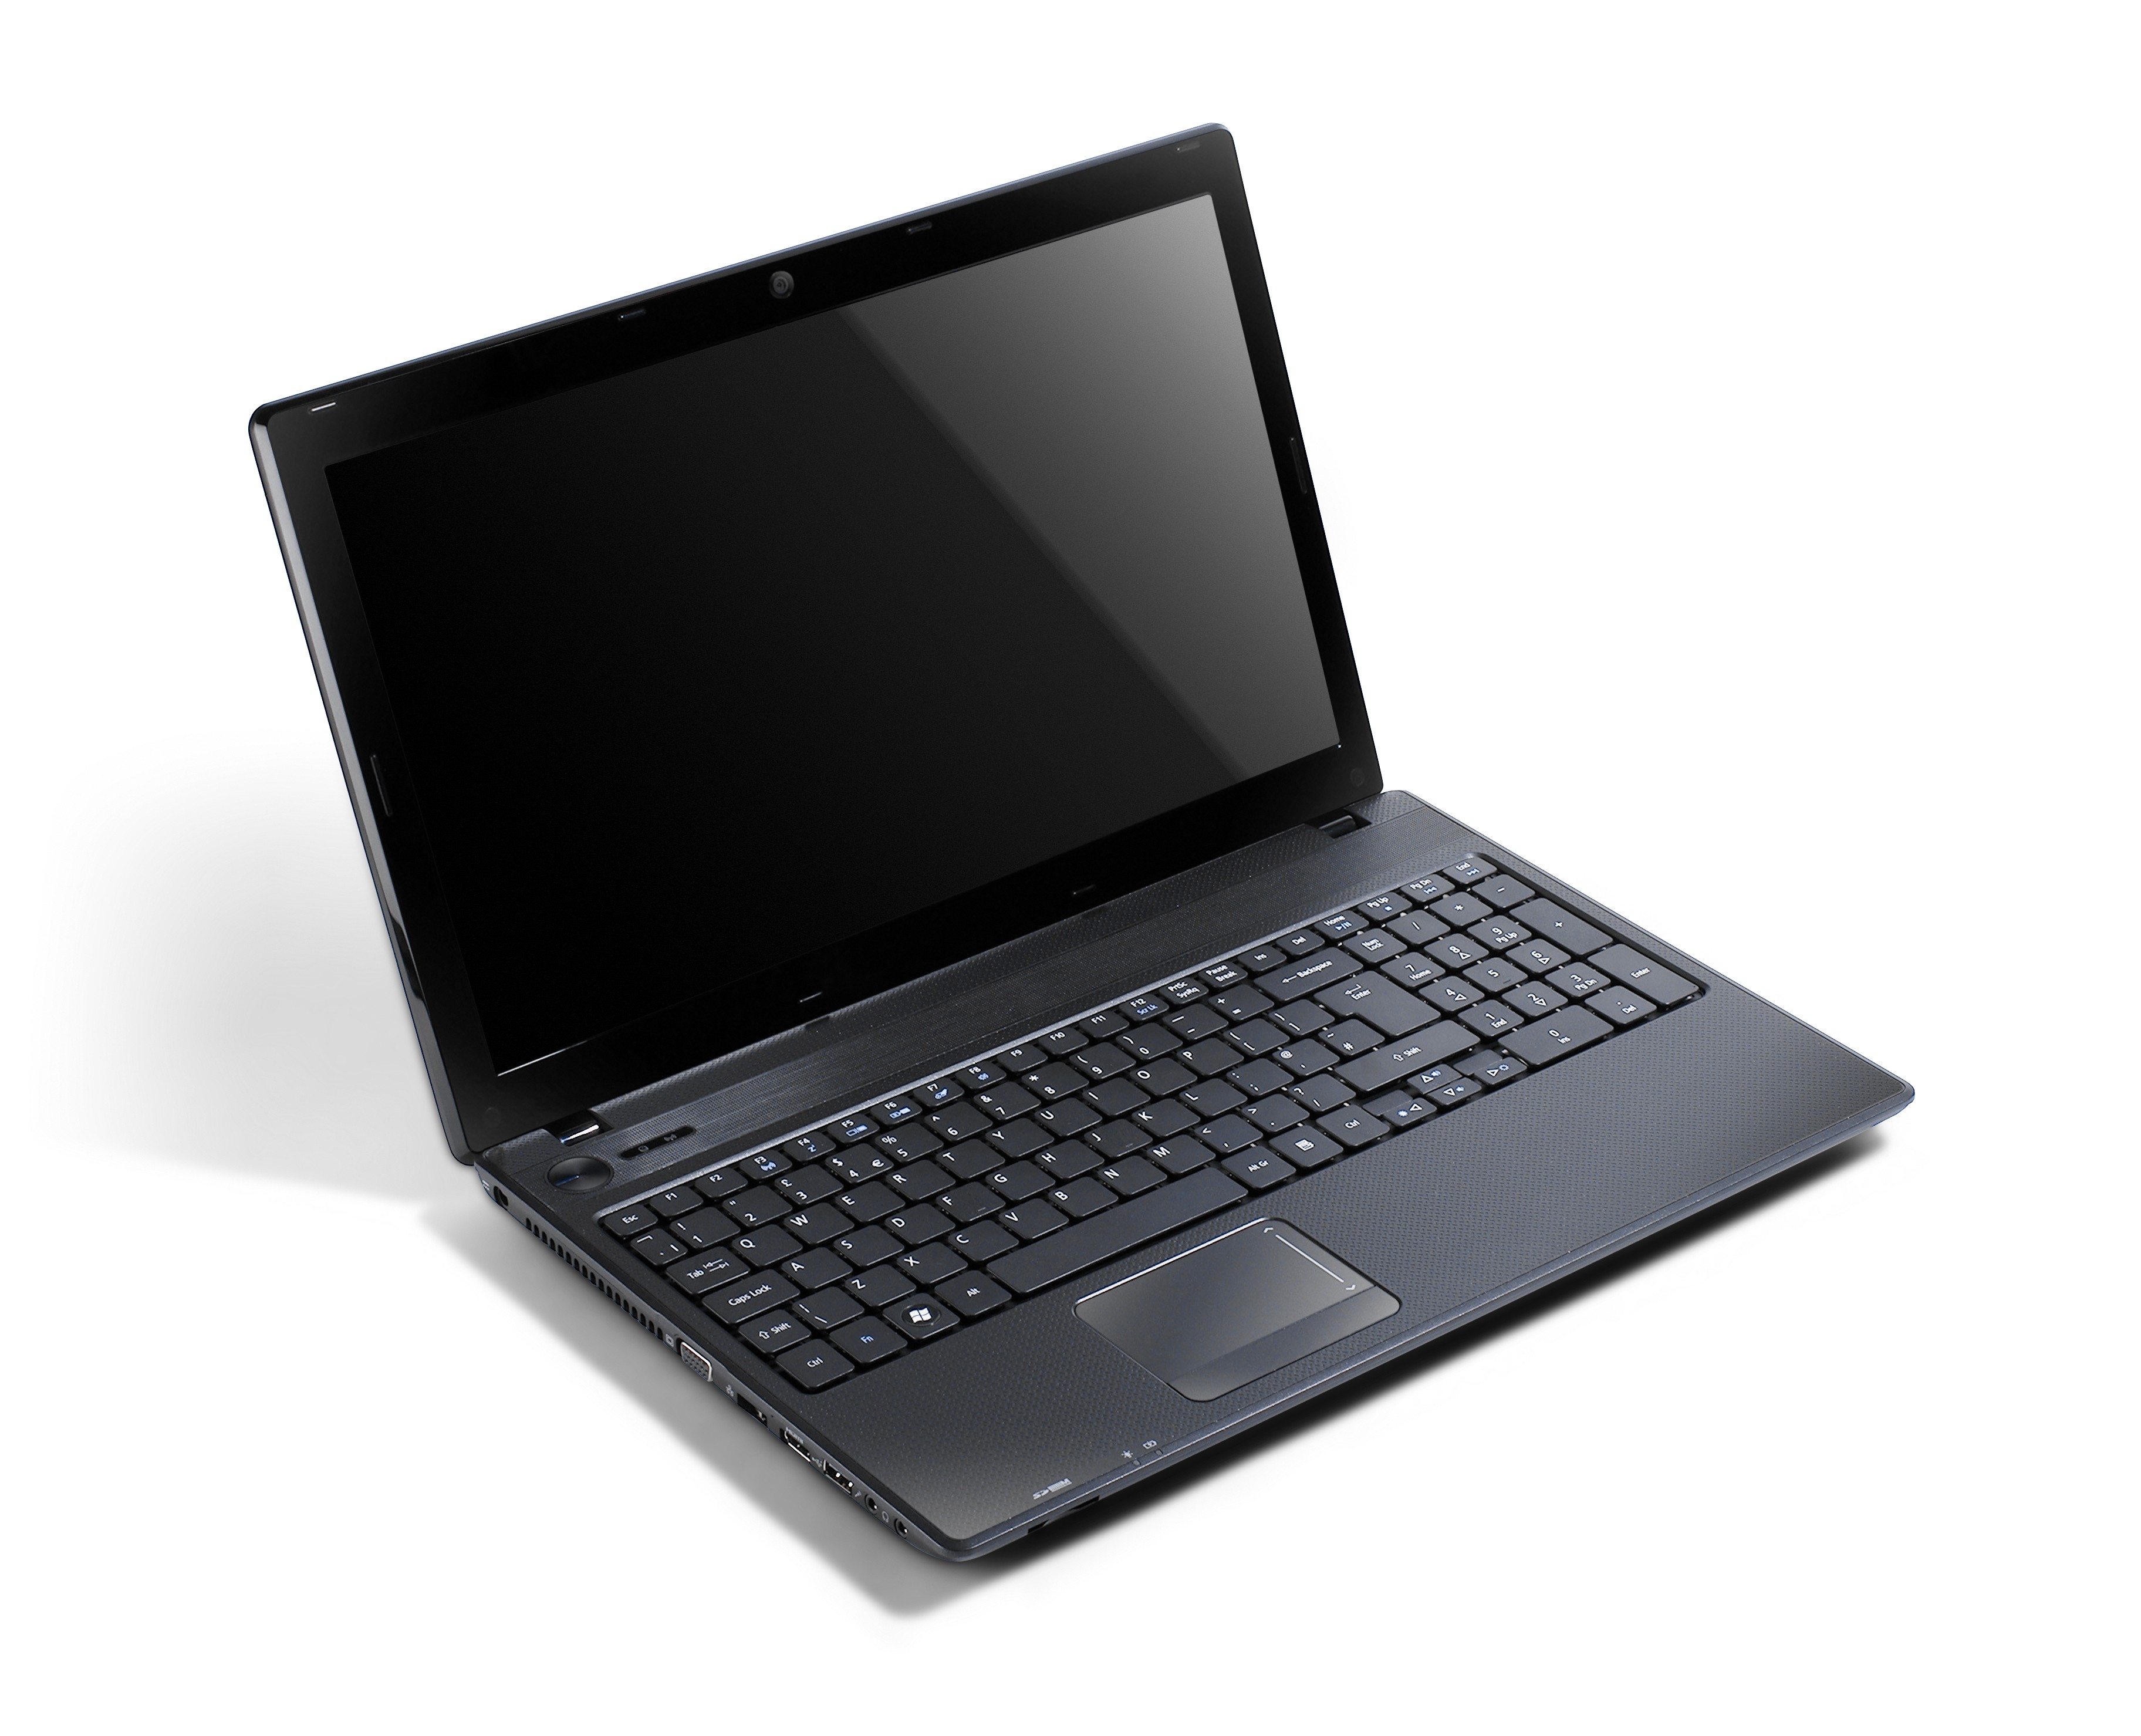 Ноутбук Acer 5742g Цена